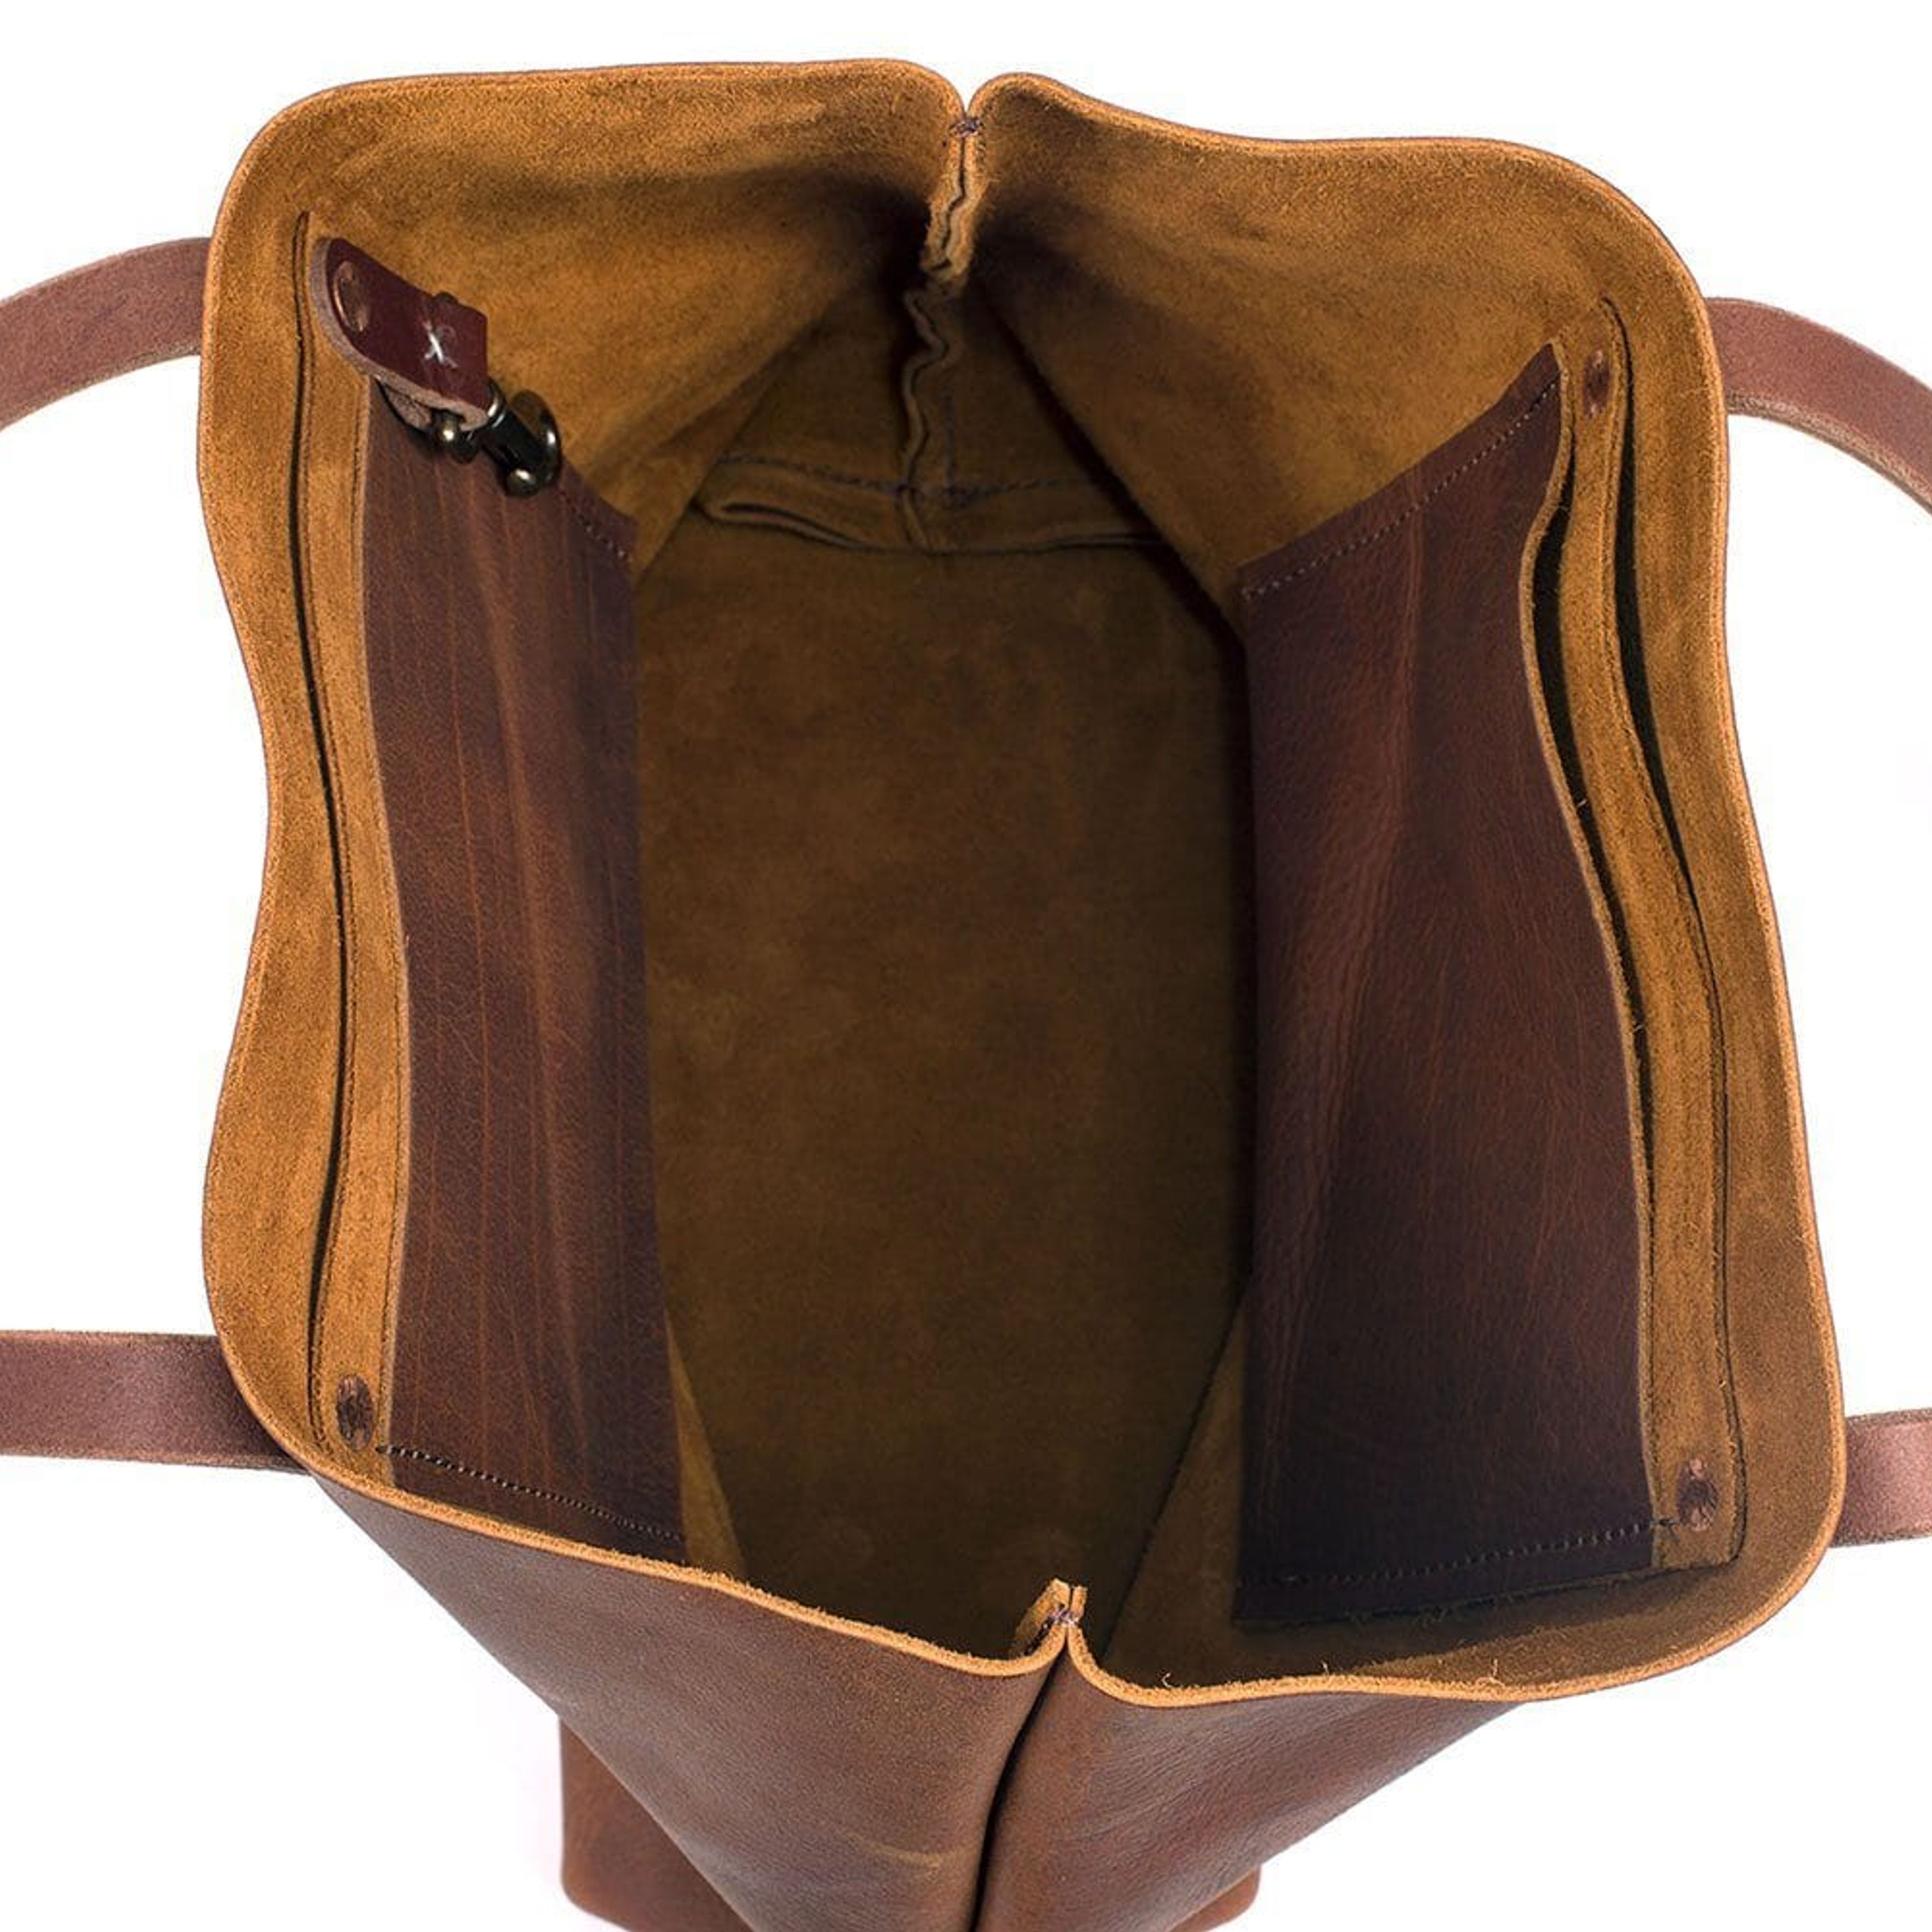 Avery Leather Tote Bag - Medium - Mocha